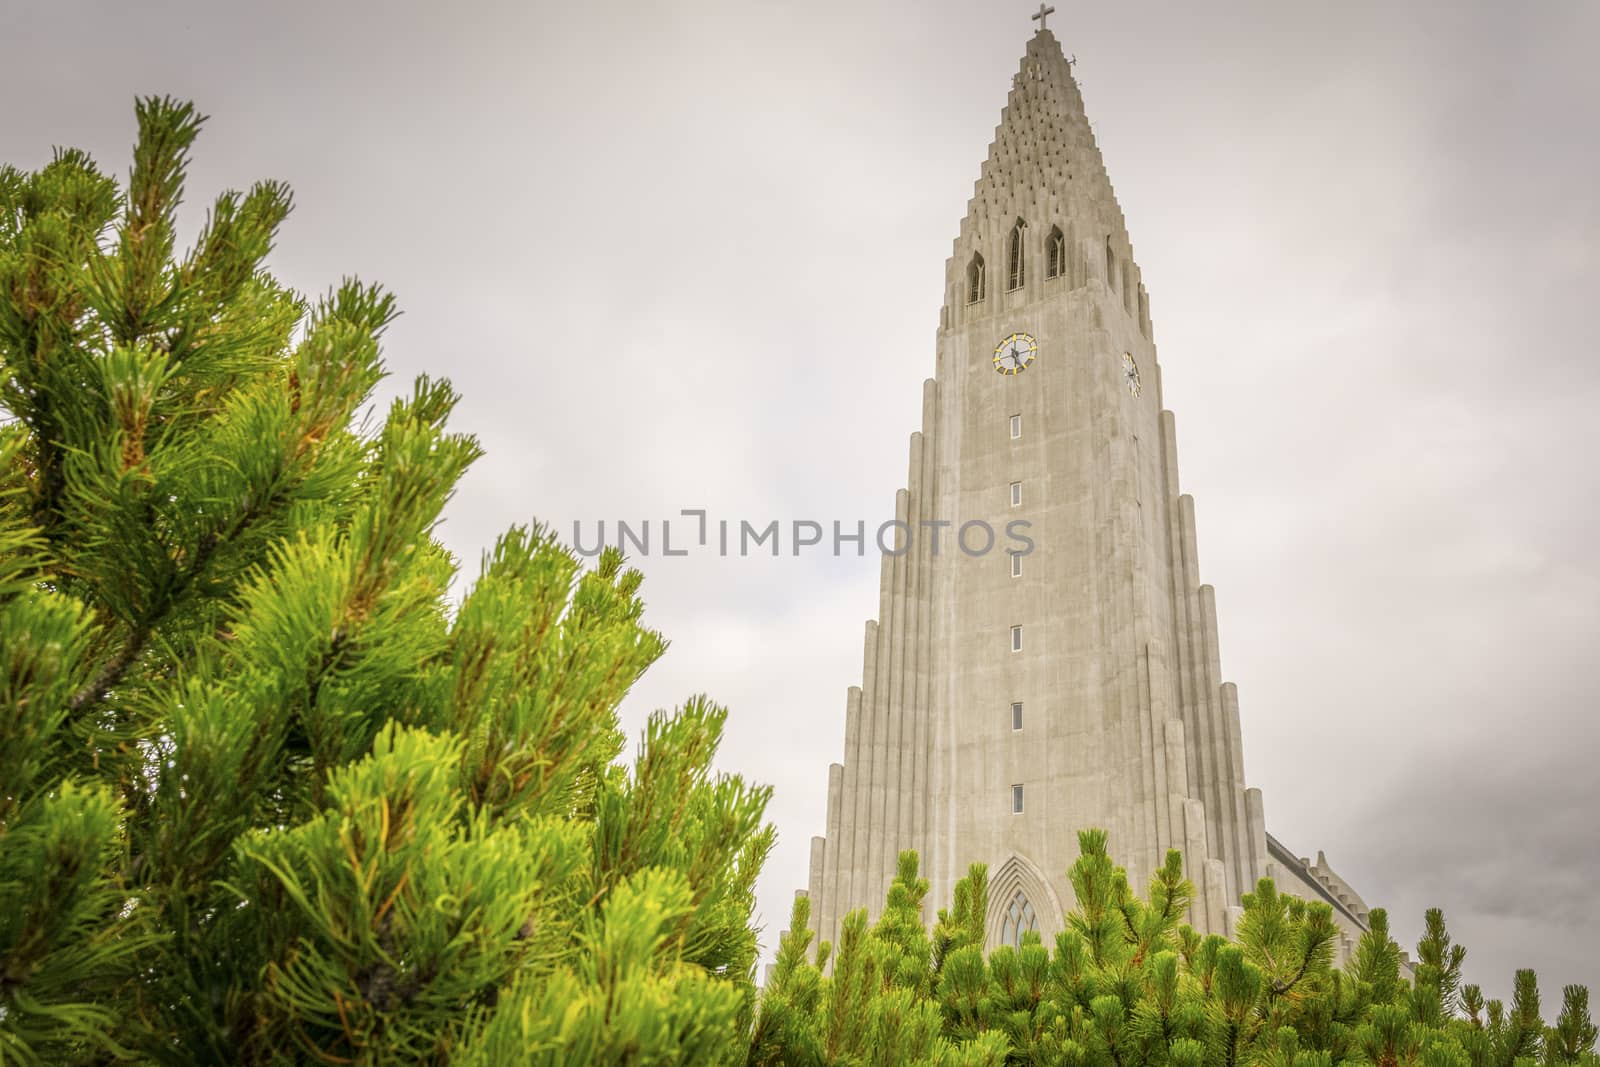 Reykjavik, Iceland, July 2019: Hallgrimskirkja or church of Hallgrimur, Lutheran parish church, by state architect Guðjón Samúelsson. Tallest building in Iceland.